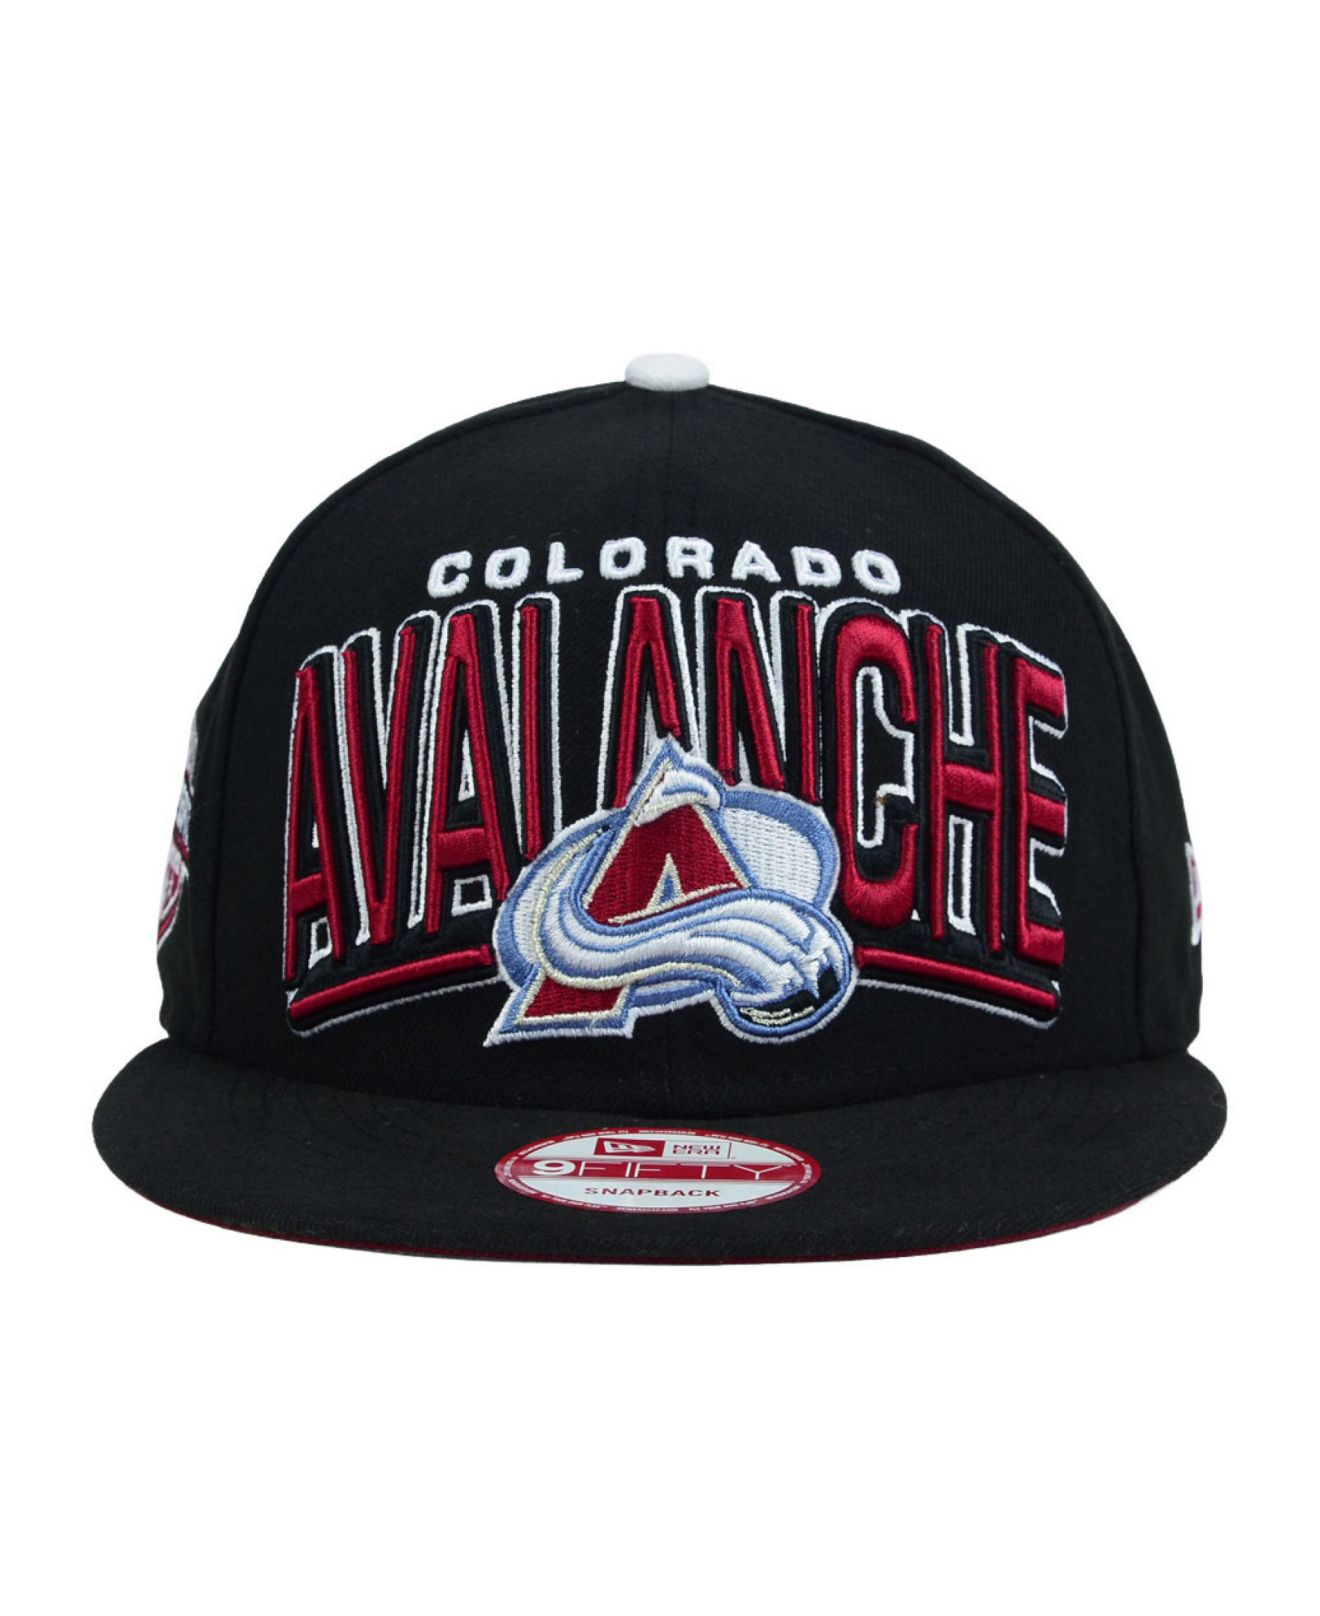 Colorado Avalanche Big Face 7.0 Black Snapback - Mitchell & Ness cap